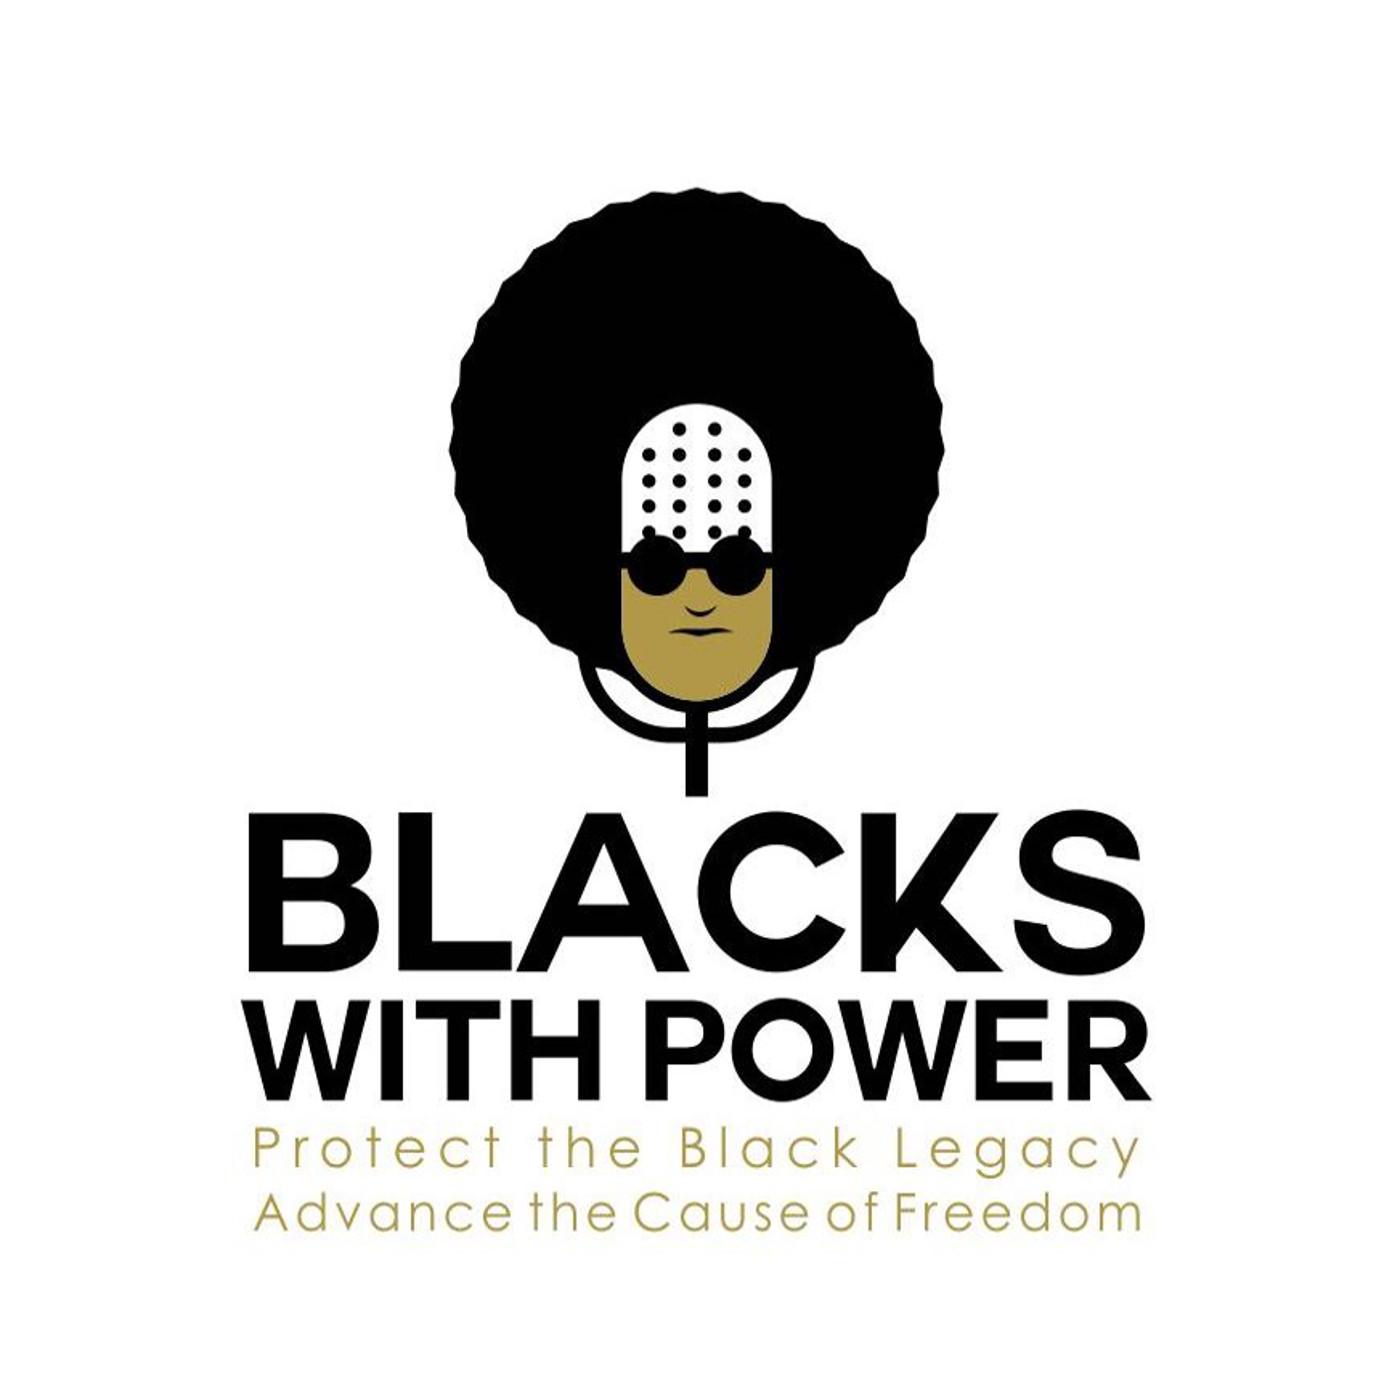 Black Power Logo - Blacks with Power| Make America Great through Black Power by Fr ...